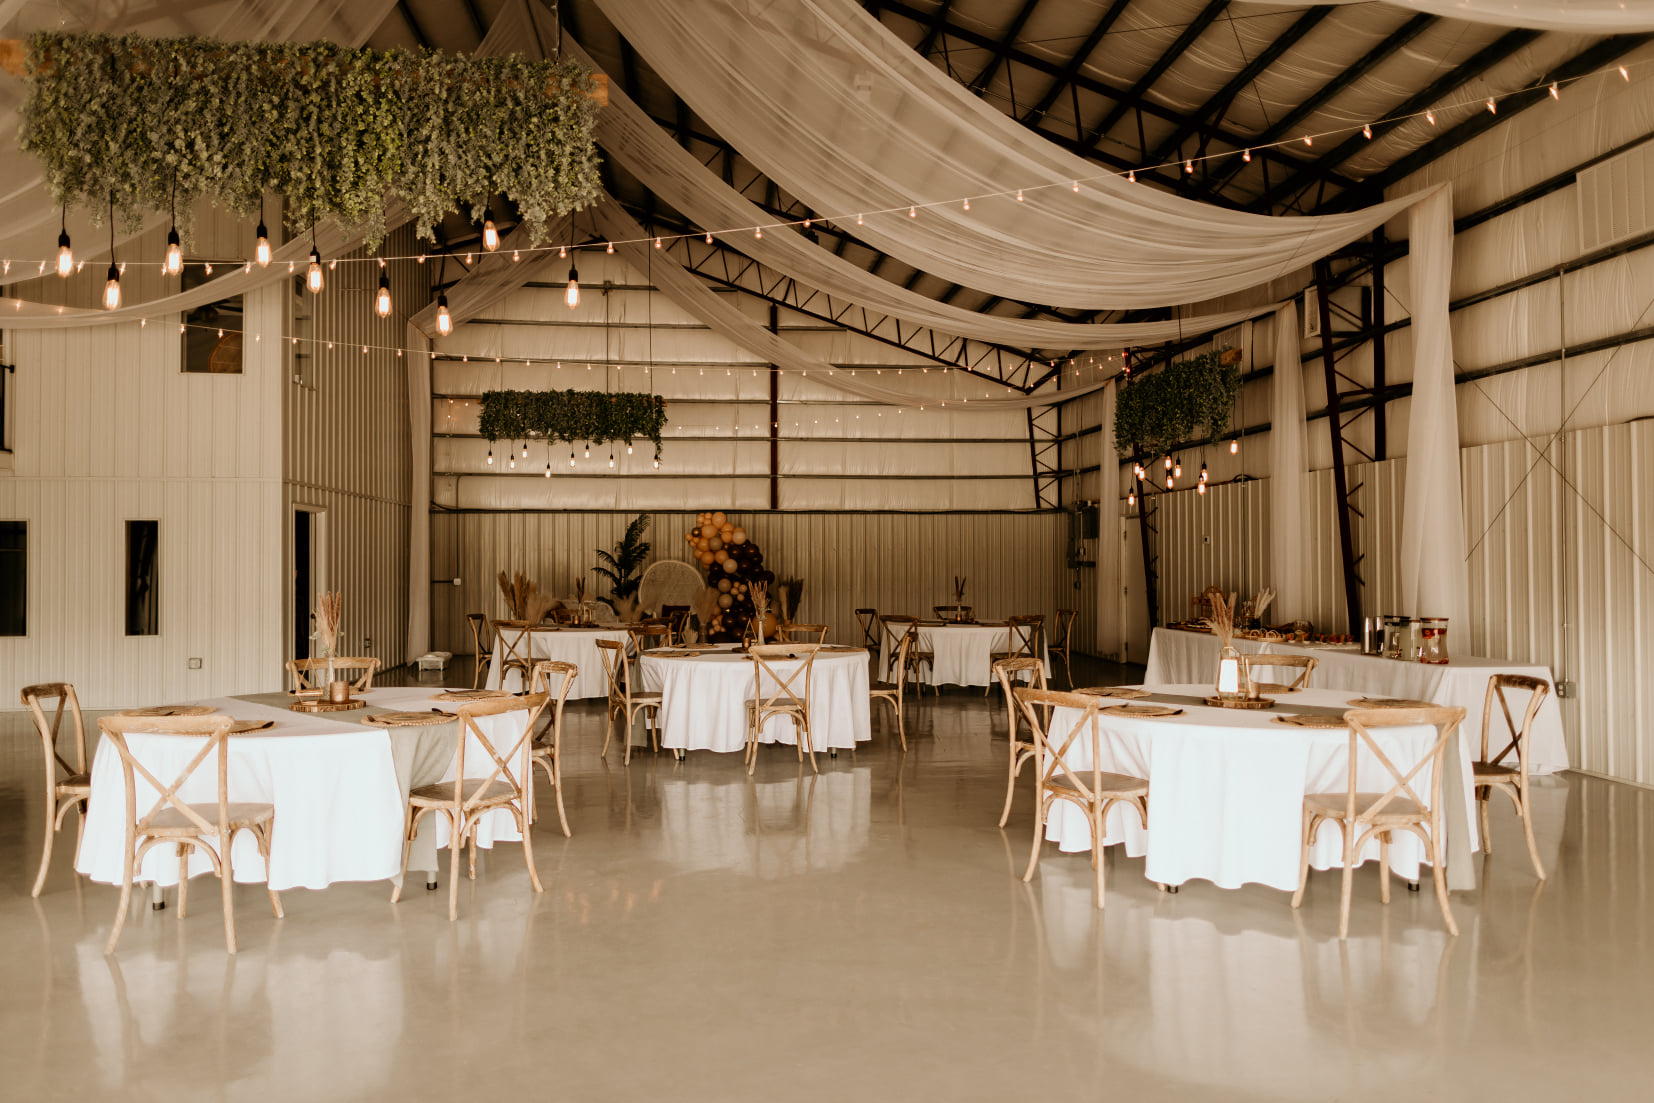 The Hangar Wedding + Event Venue